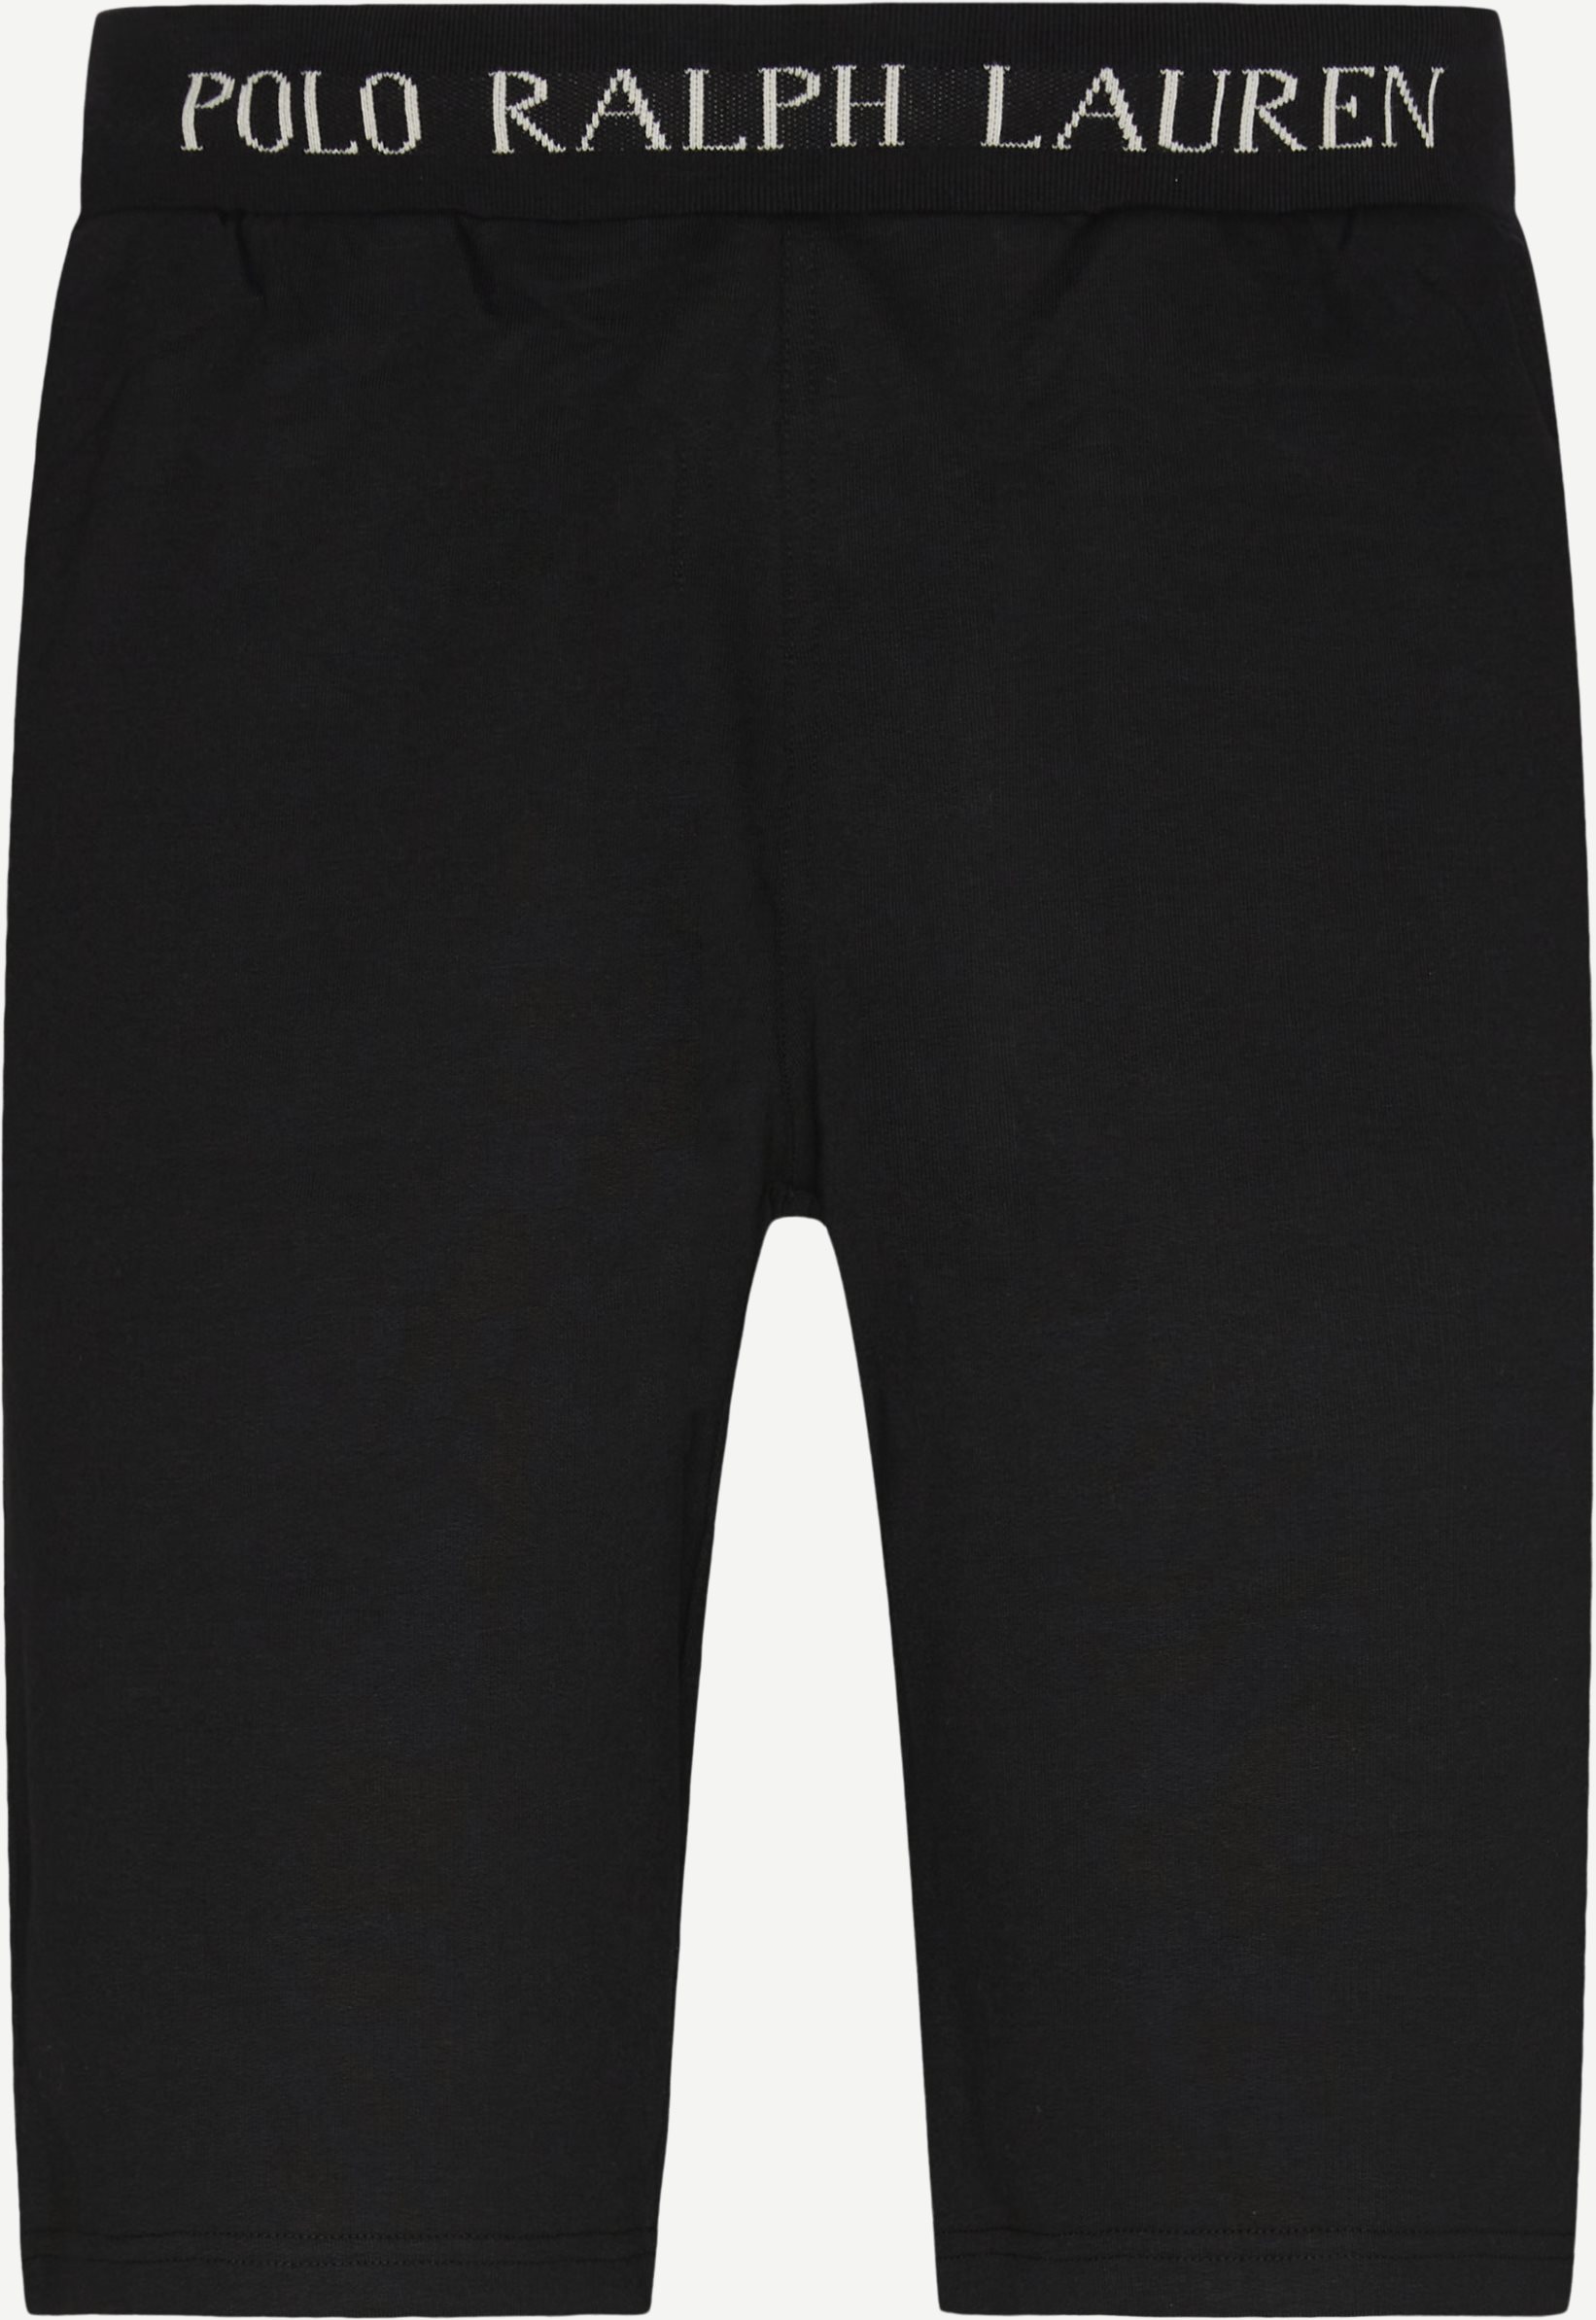 Jogginghose mit Logo - Shorts - Regular fit - Schwarz